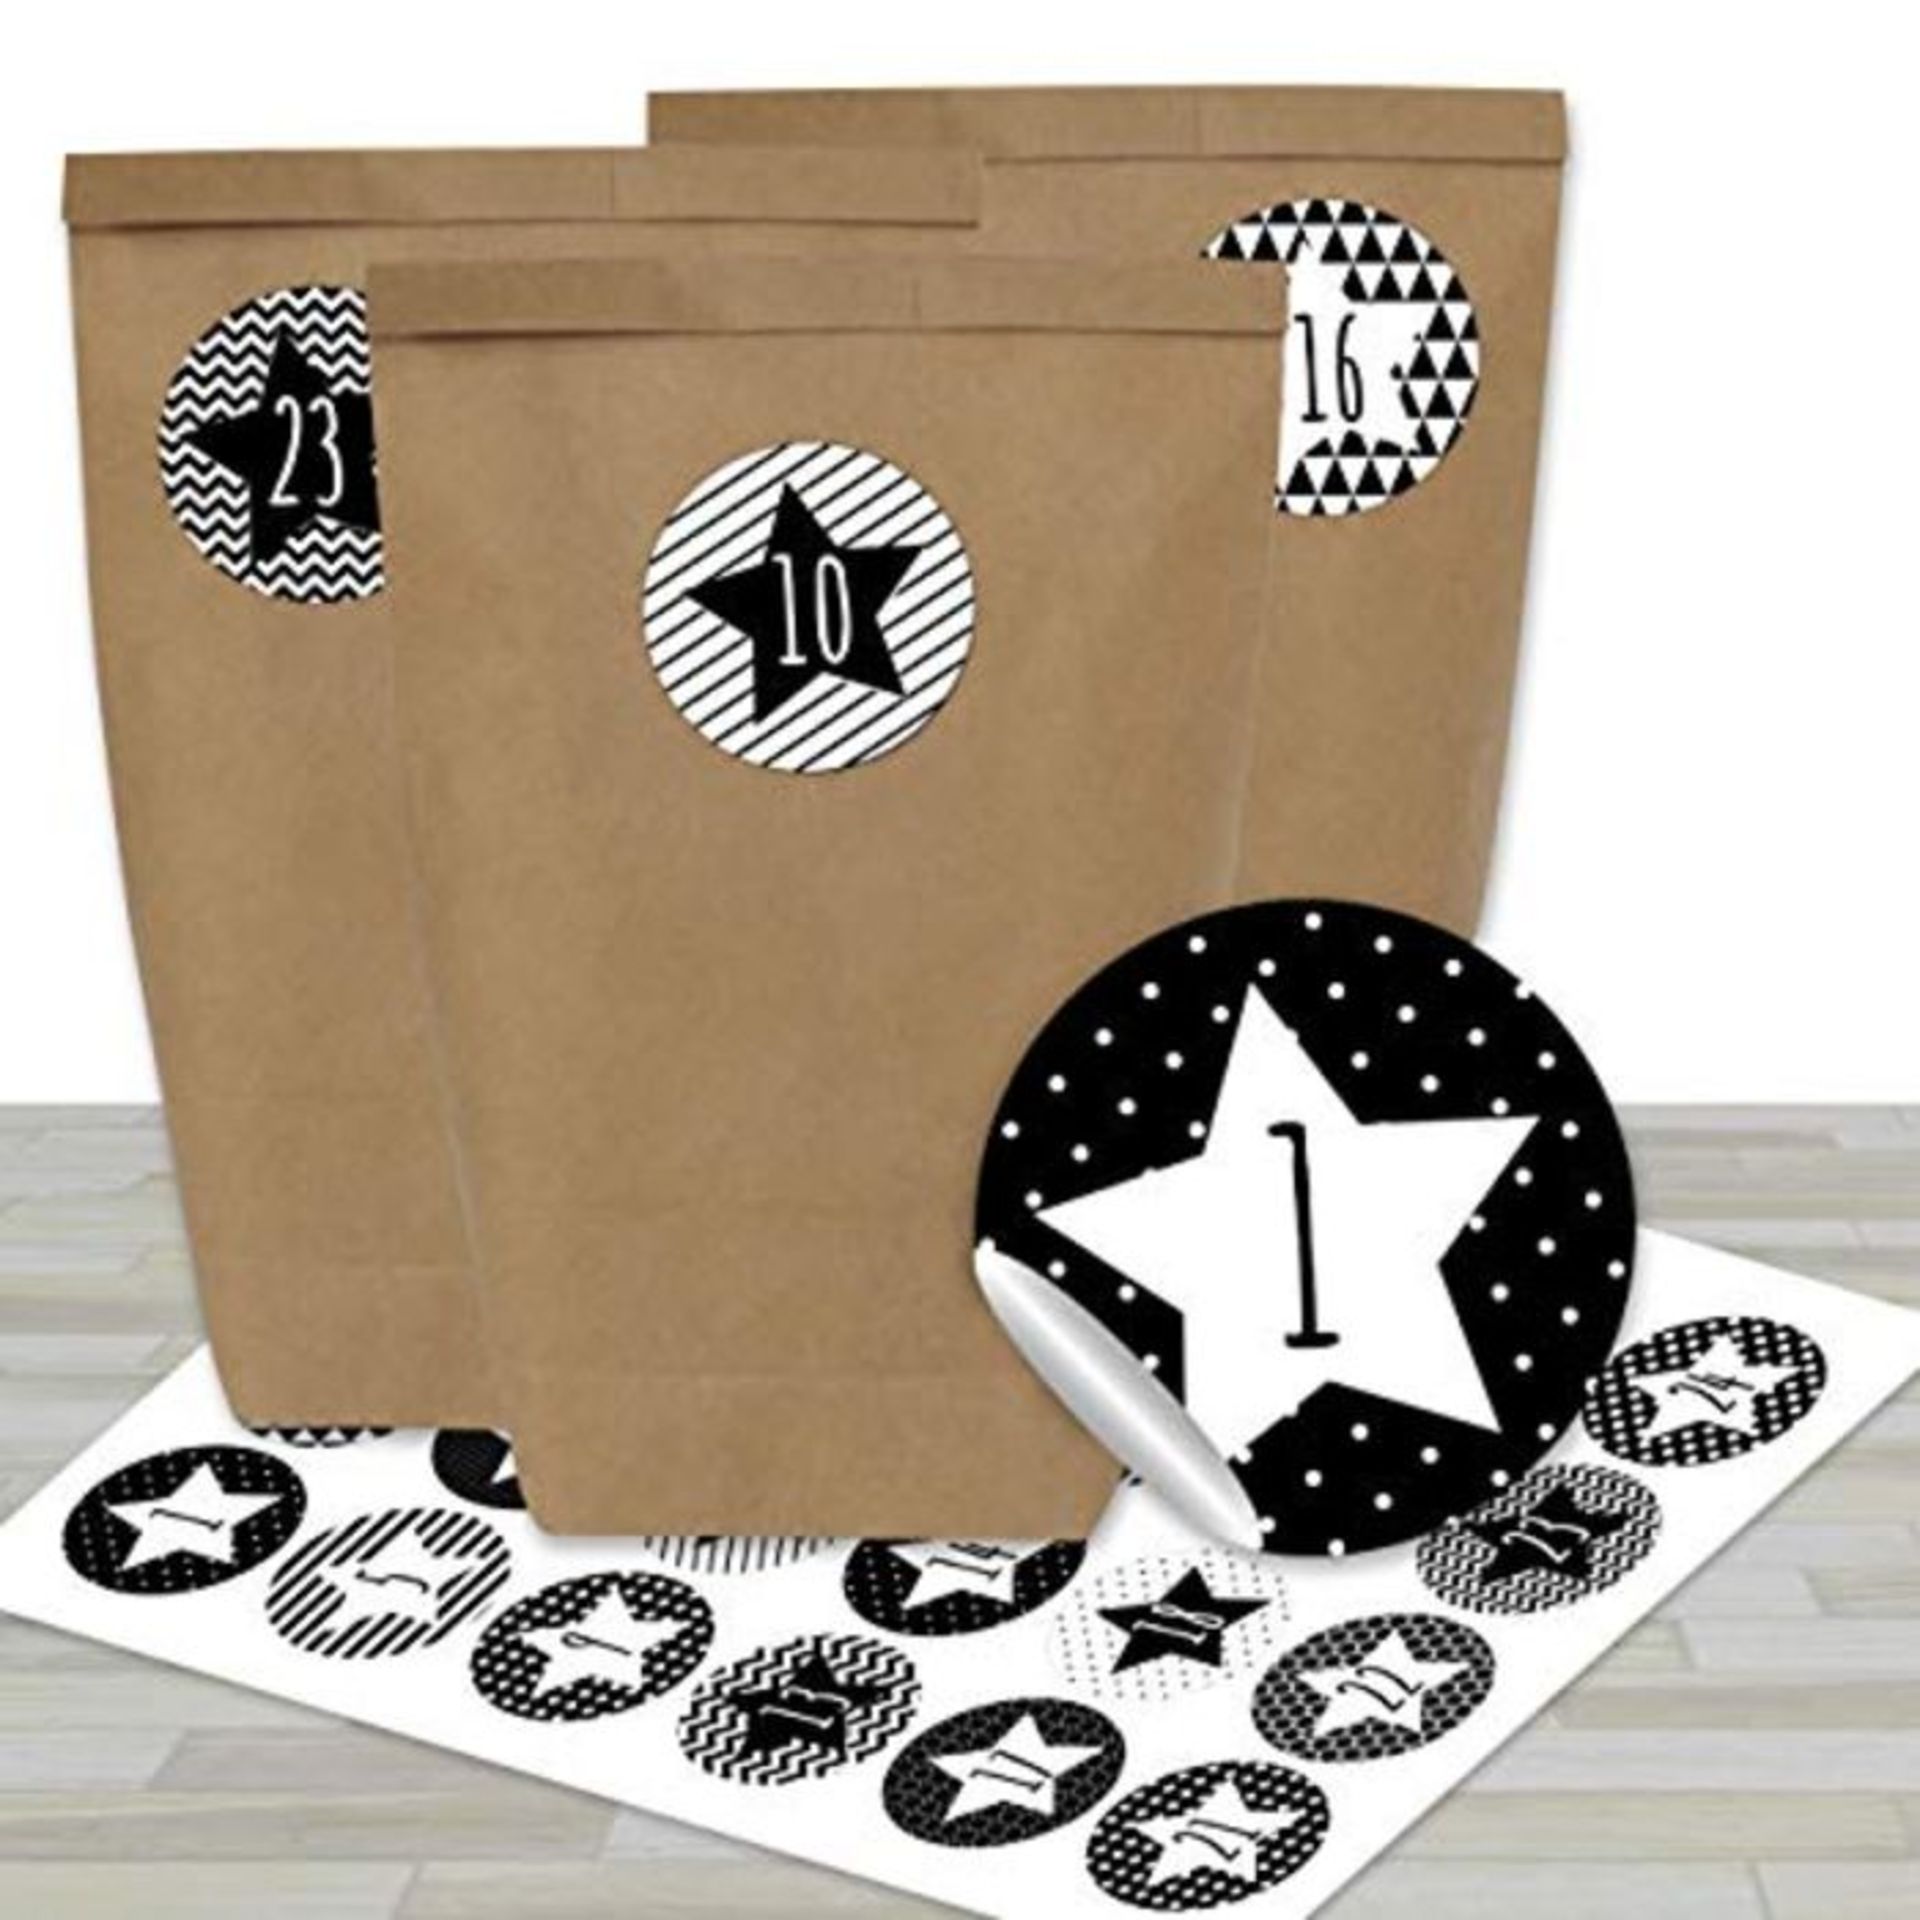 Papierdrachen Advent calendar 24 paper bags with stickers - black and white geometric